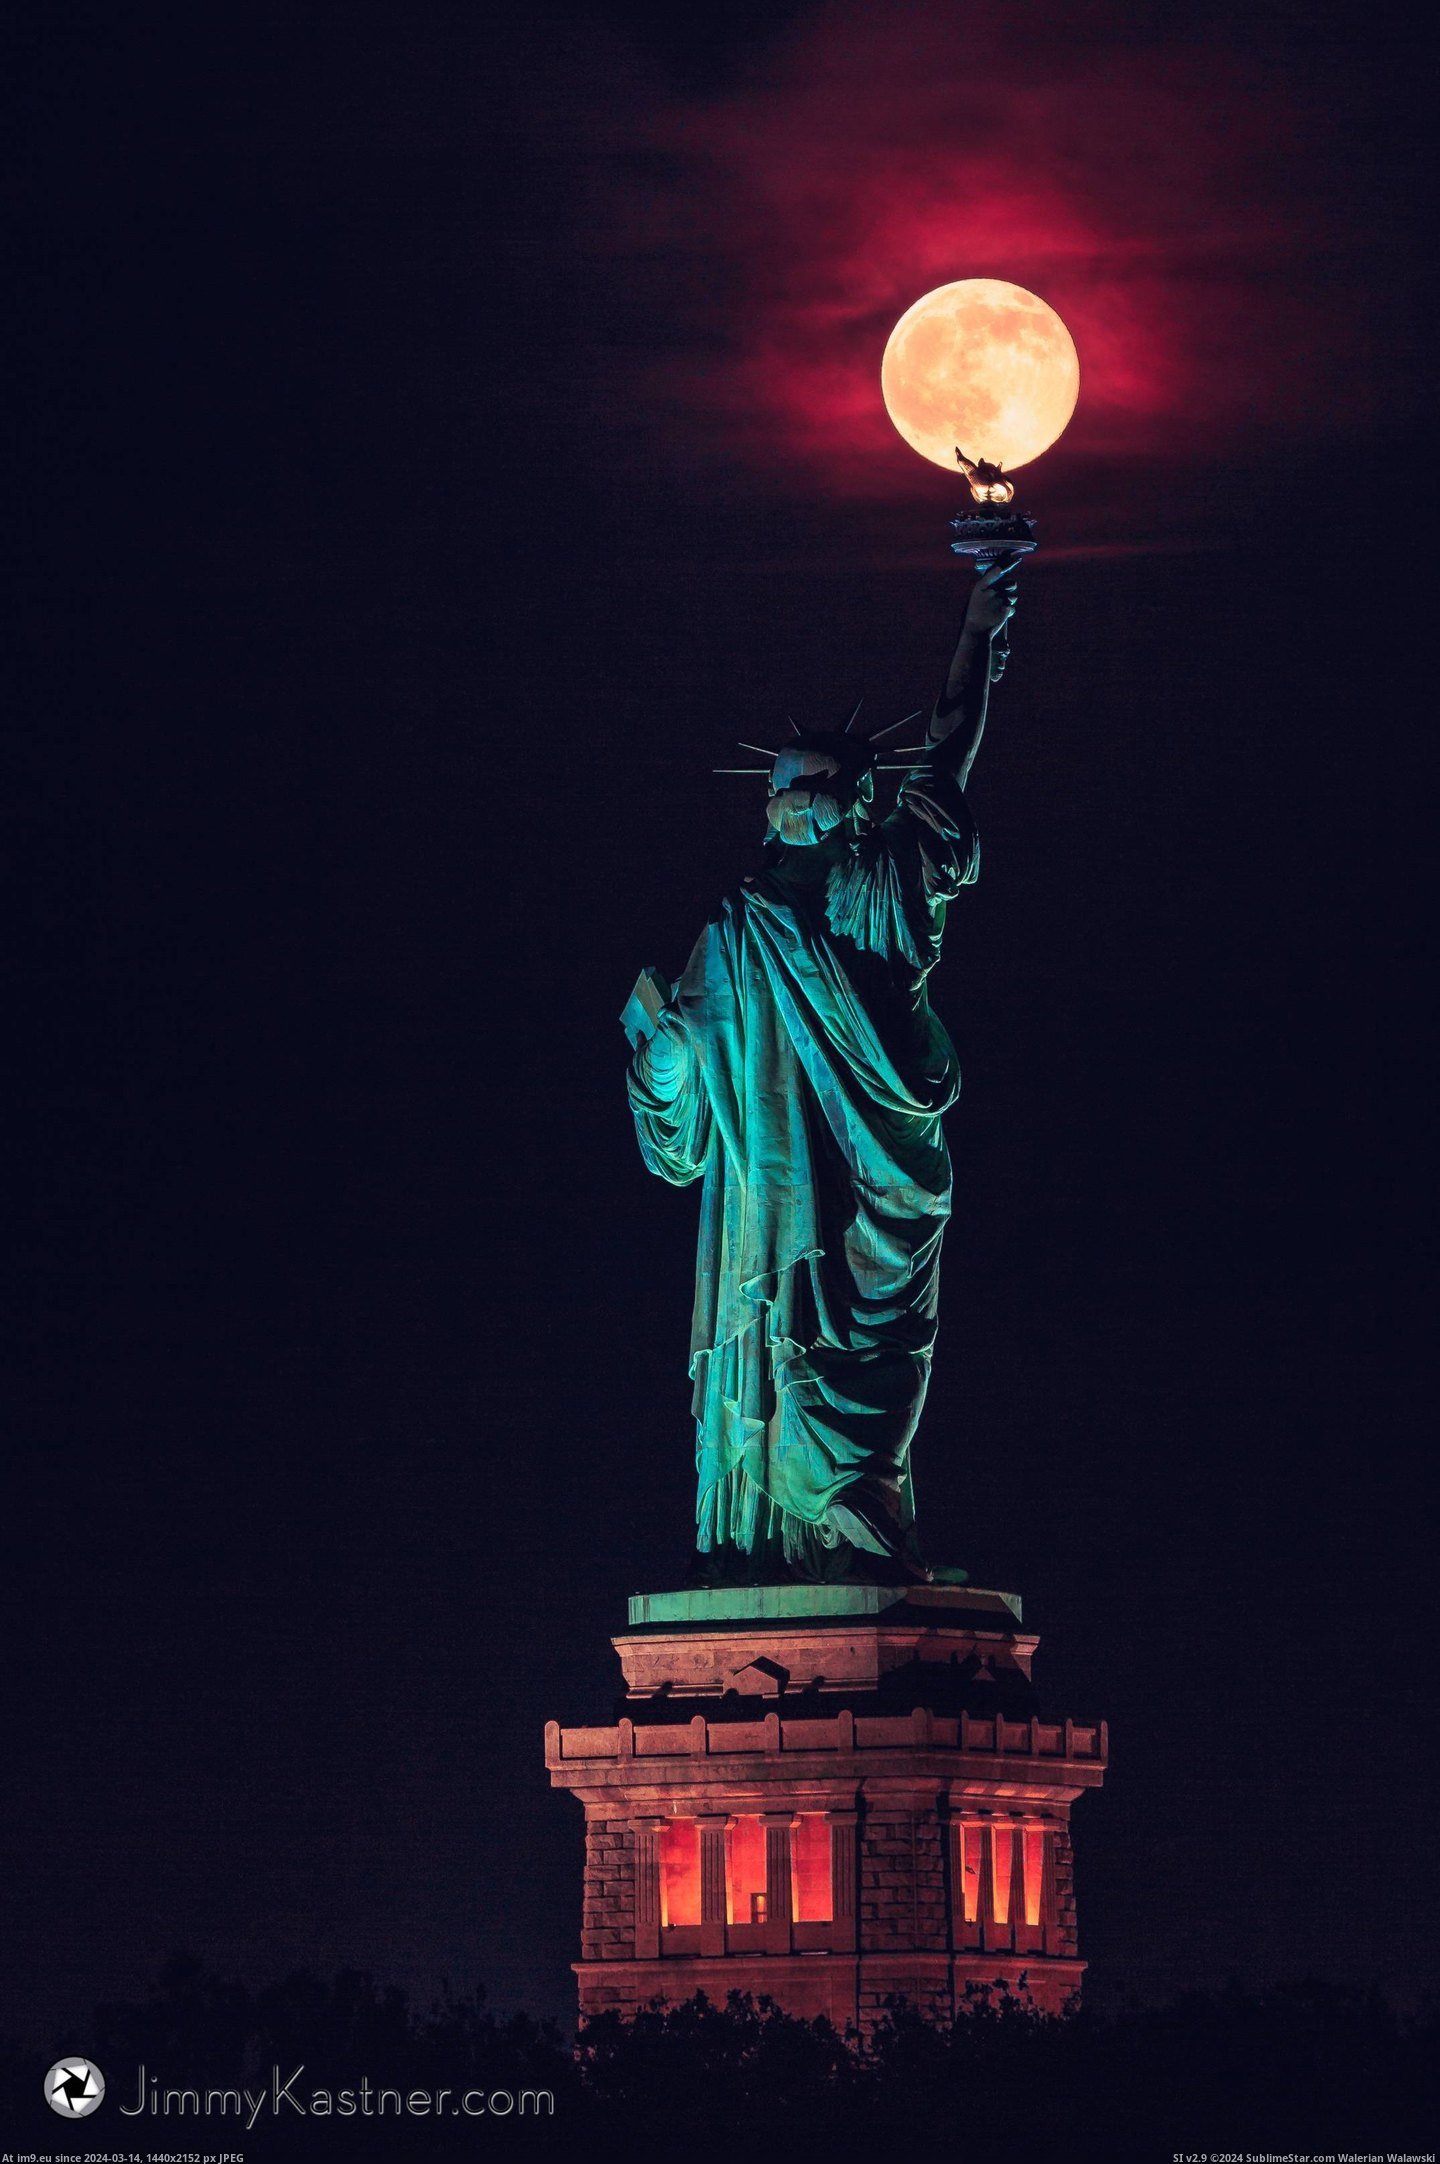 #Night #Full #Summer #Solstice #Balancing #Liberty #Moon #Rare #Statue [Pics] Last night's rare summer solstice full moon balancing on the Statue of Liberty's torch Pic. (Изображение из альбом My r/PICS favs))